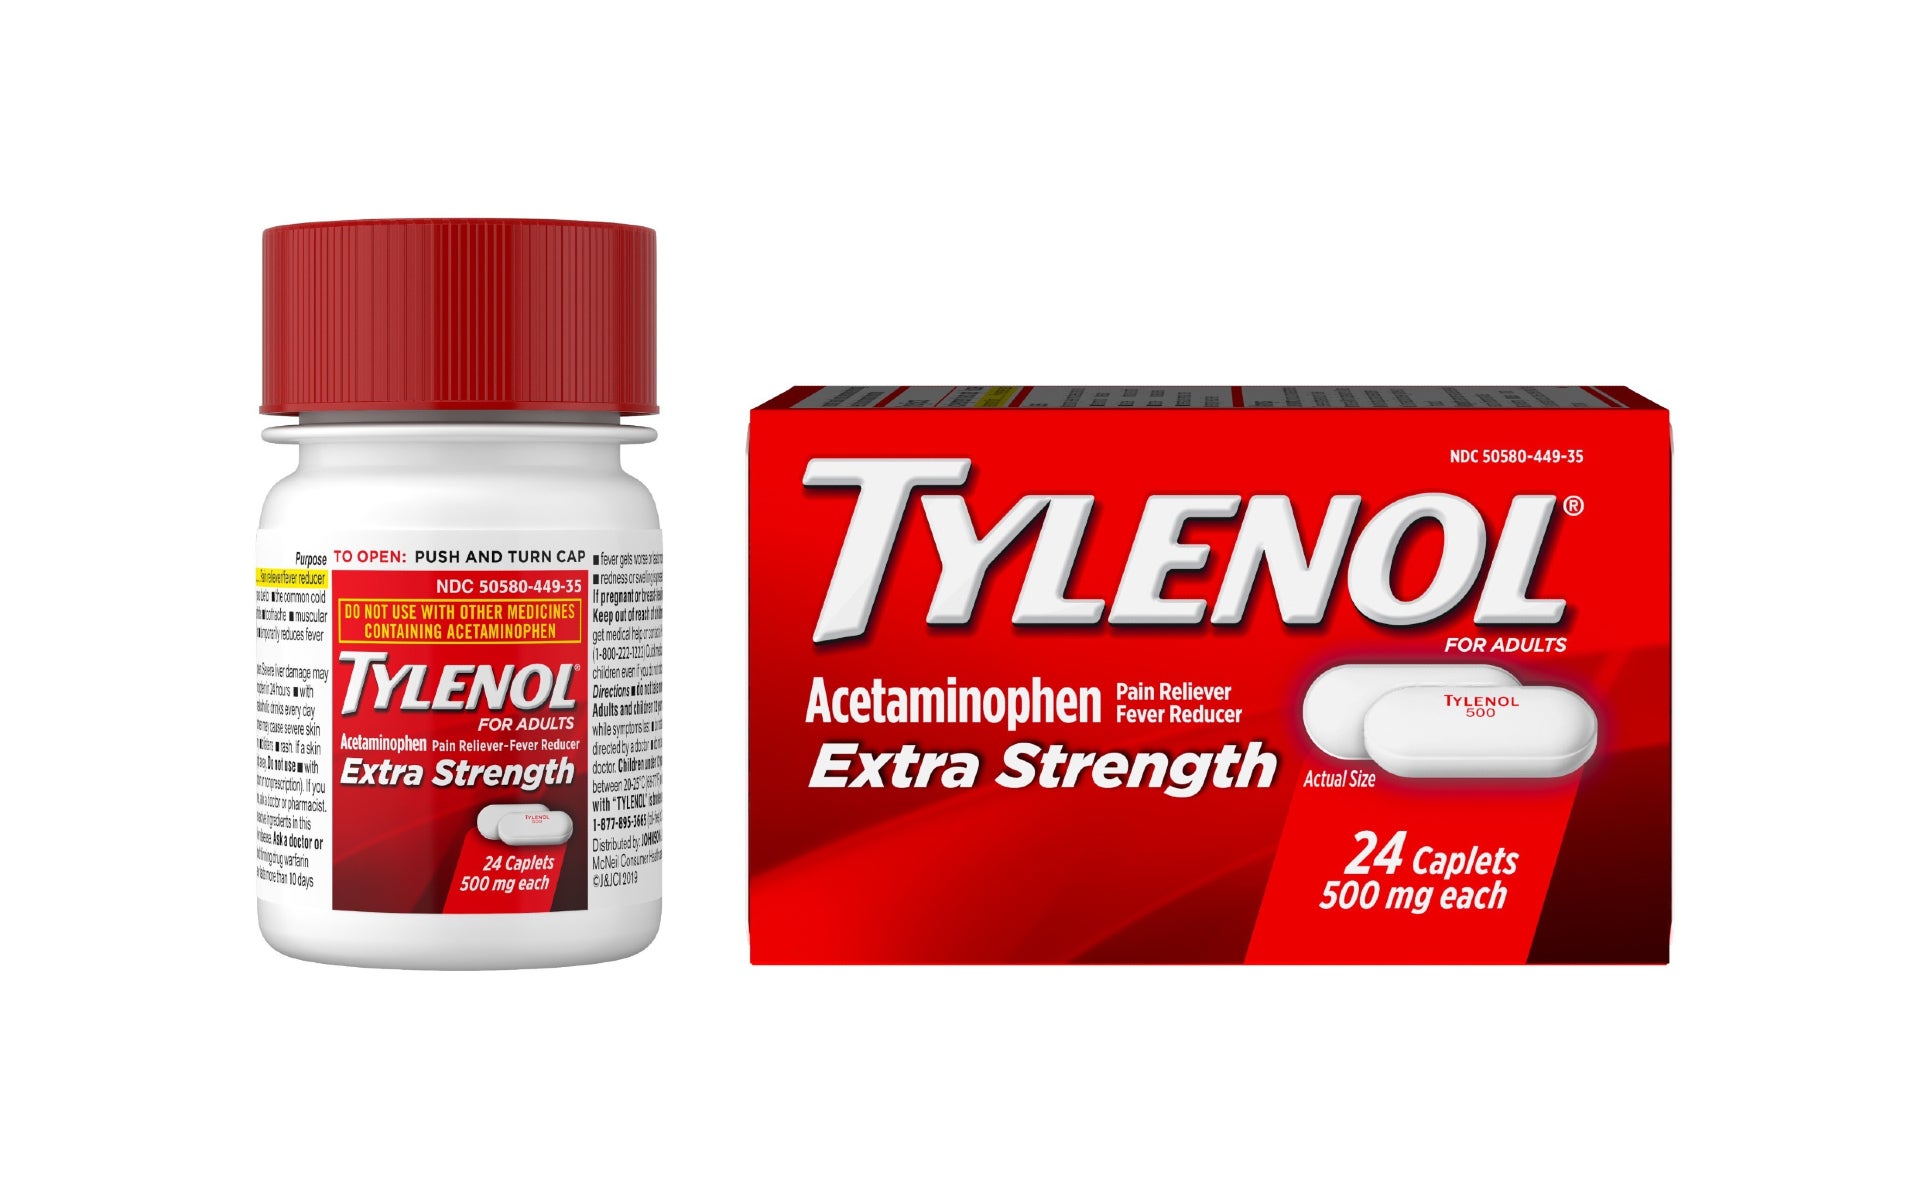 Extra strength Tylenol